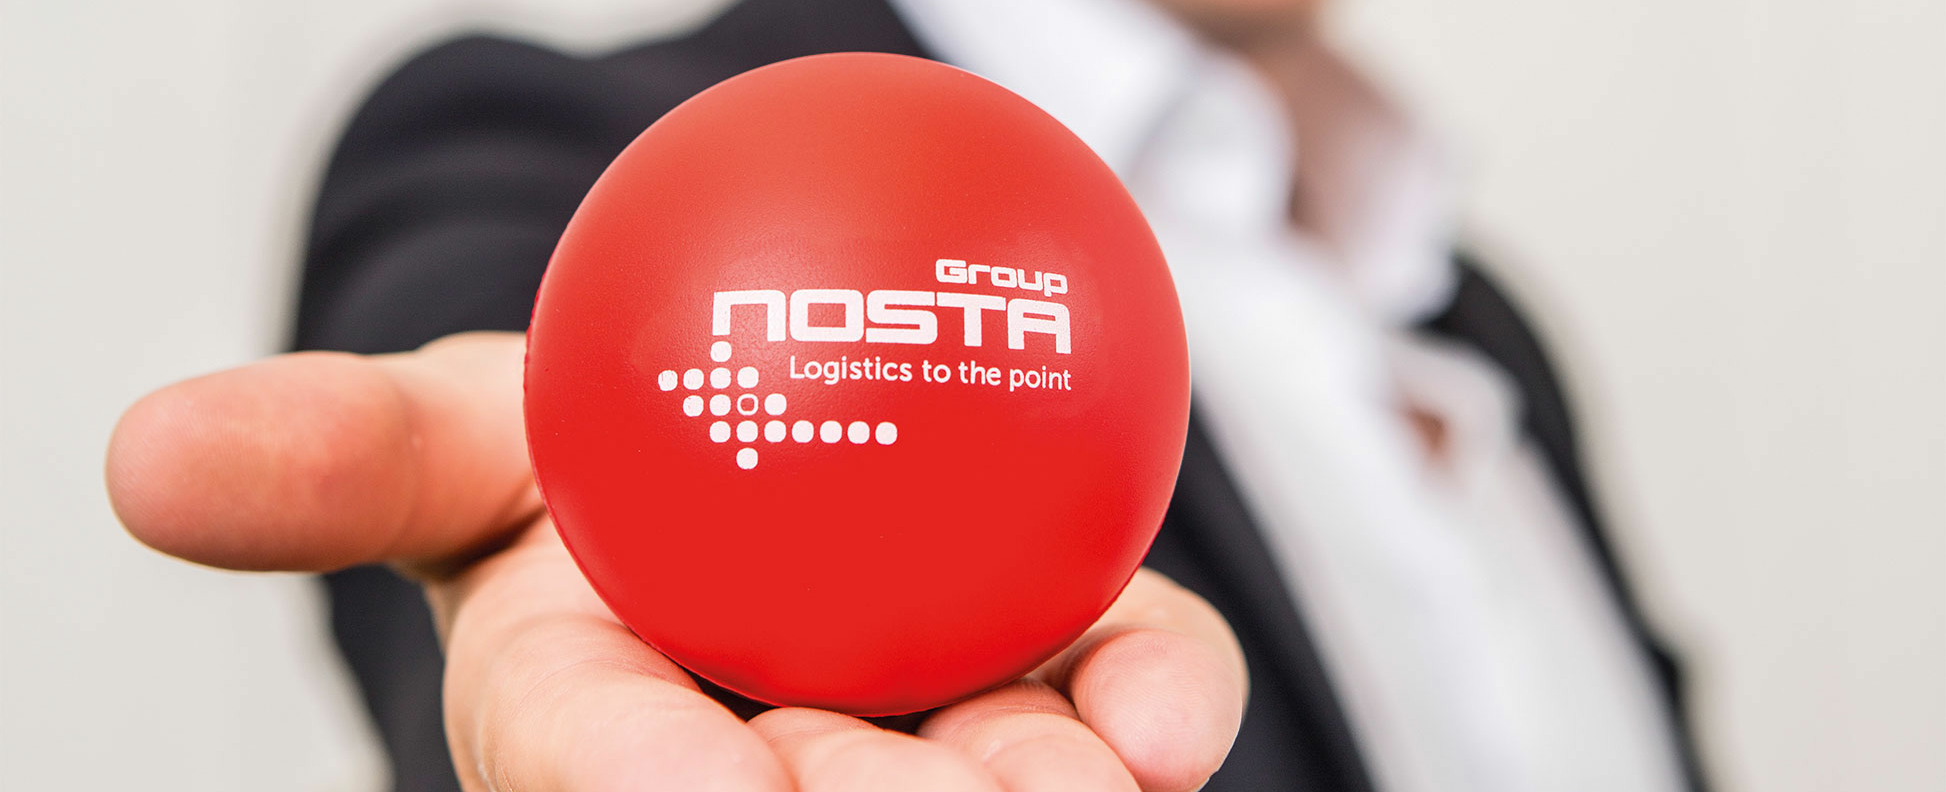 NOSTA Group Leitbild mit rotem NOSTA-Ball